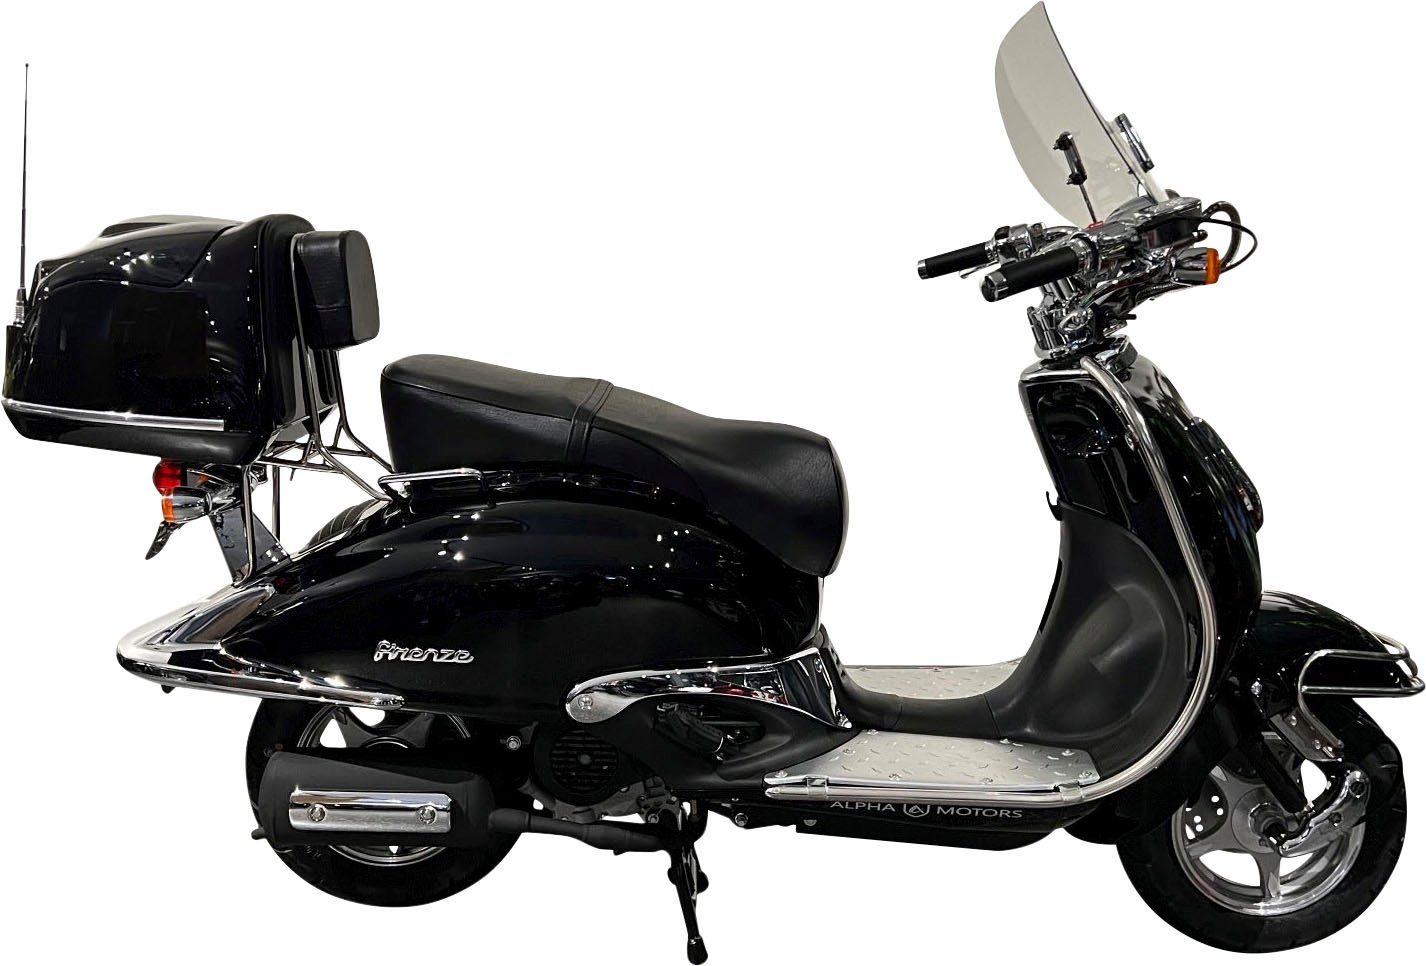 Alpha Motors 5 Motorroller Euro ccm, 50 45 km/h, schwarz schwarz | Firenze Limited